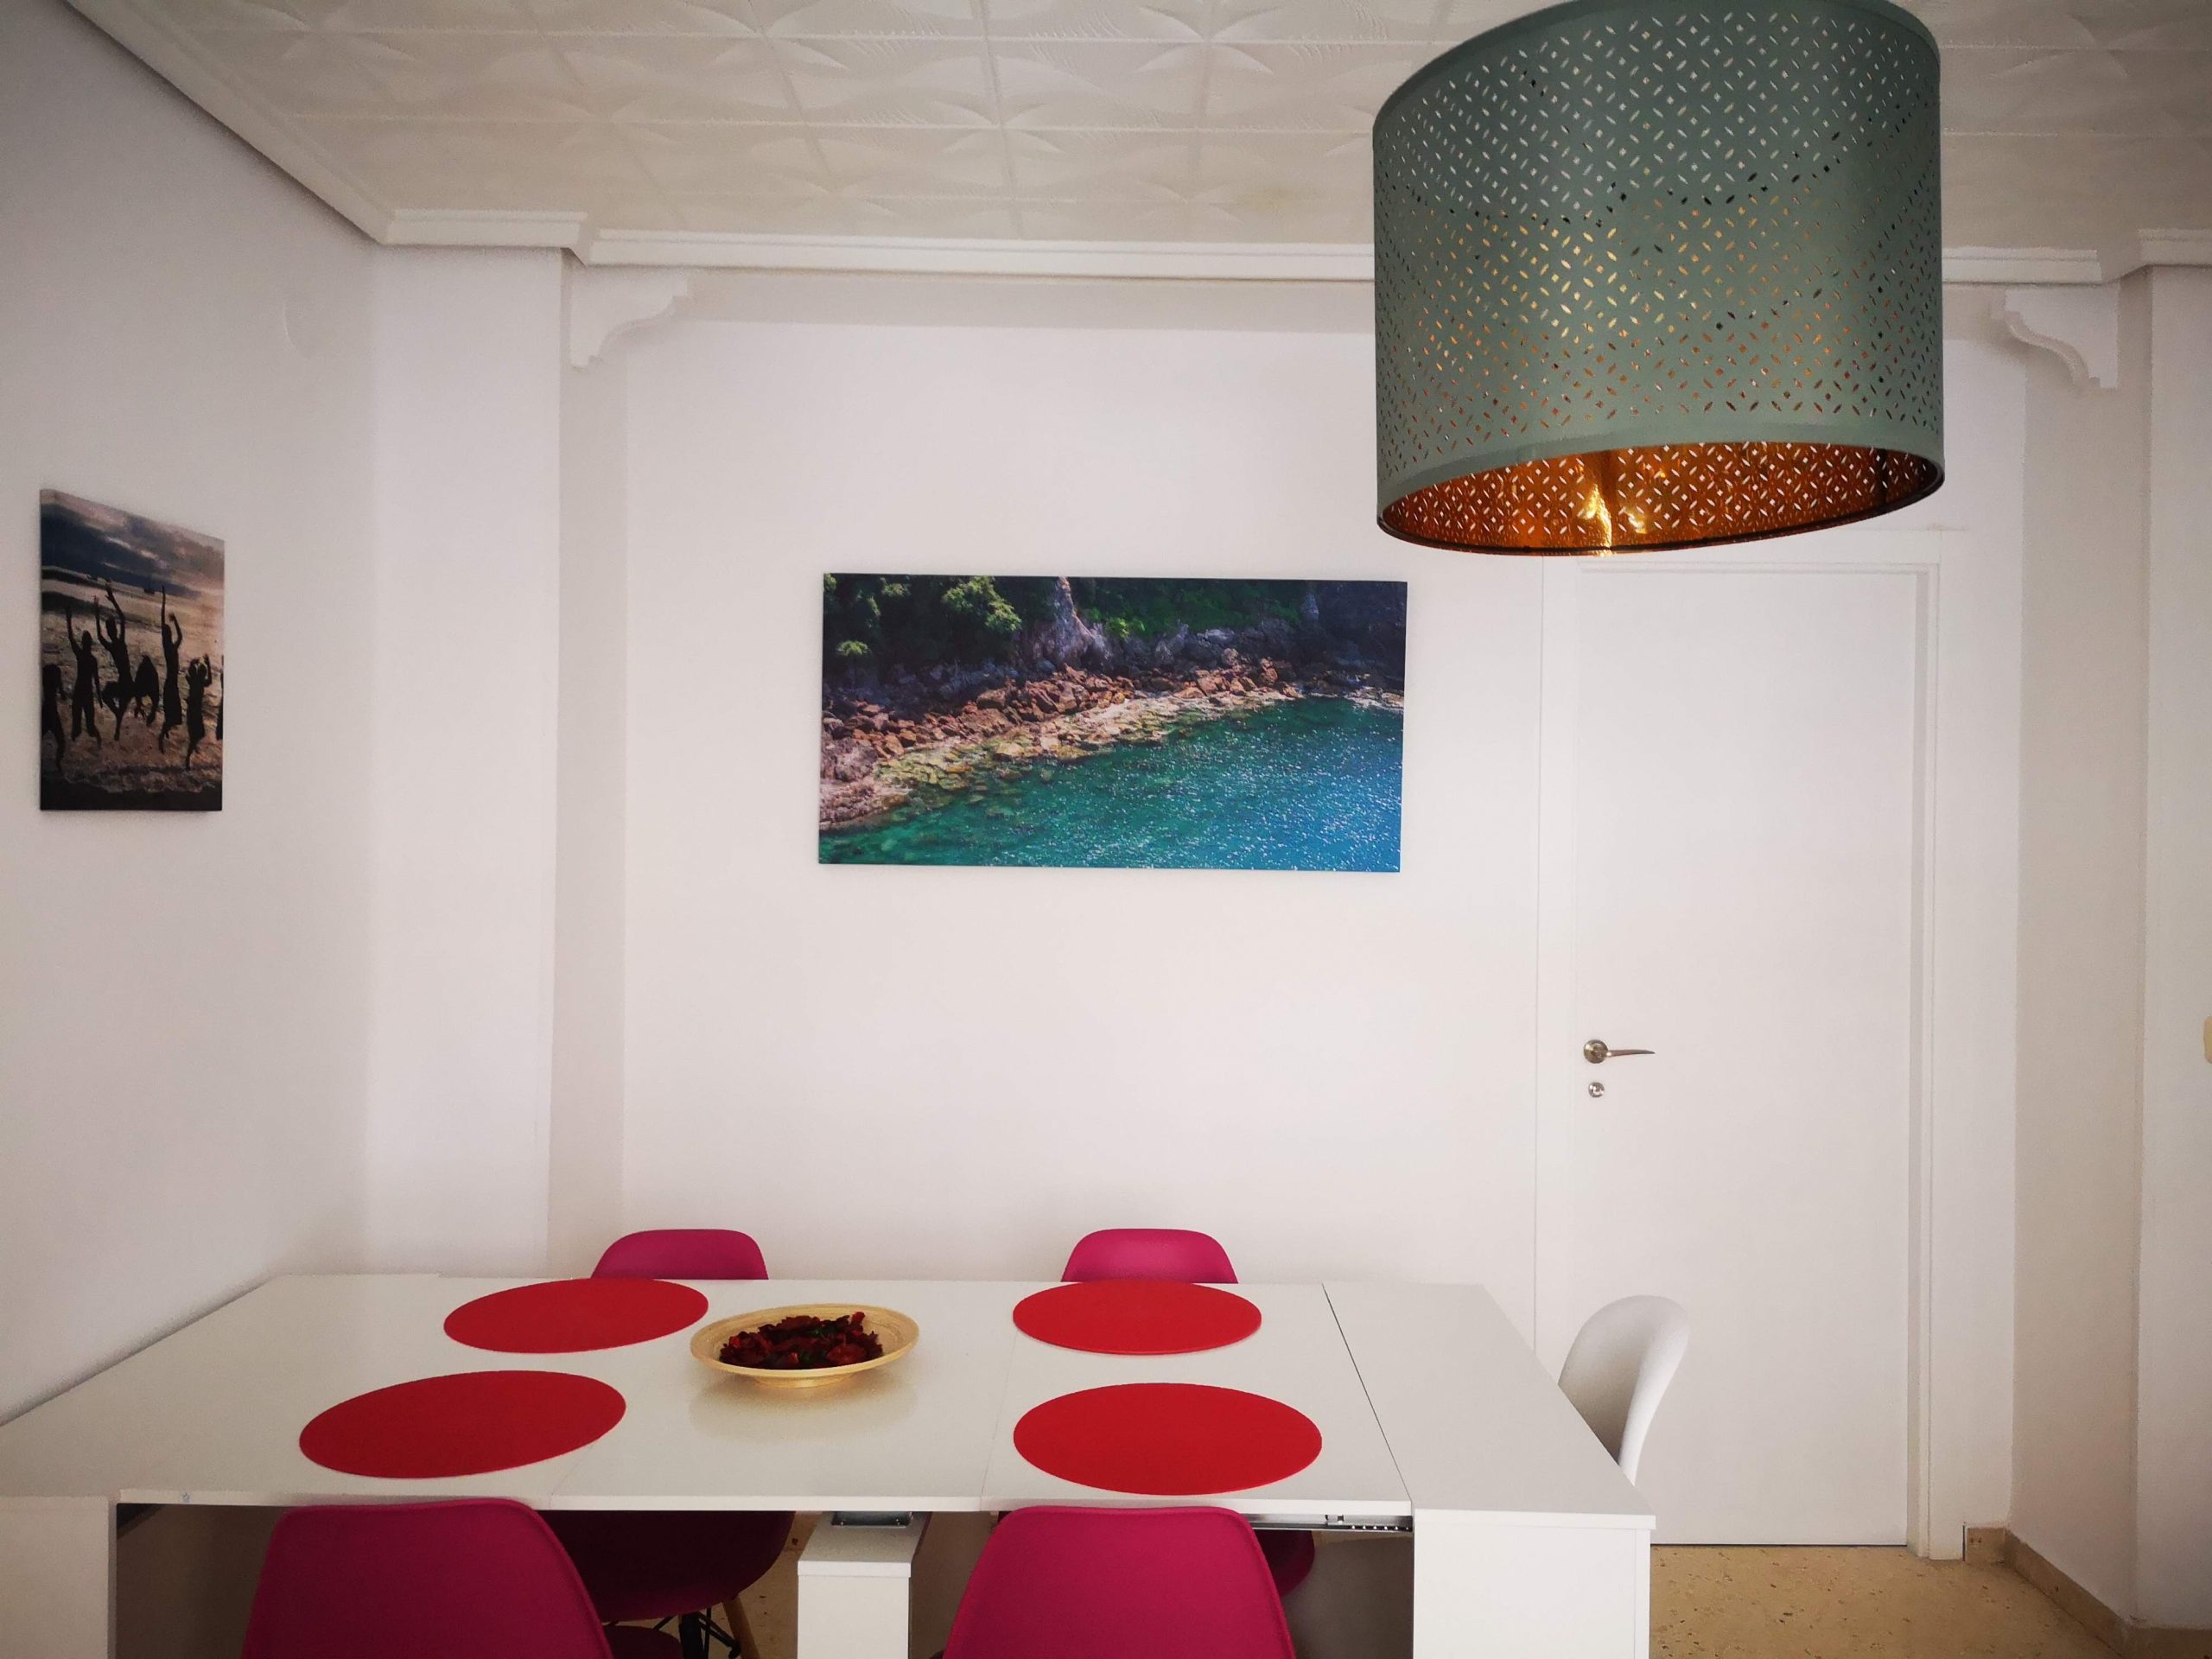 Aparment for rent in Valencia - livingroom